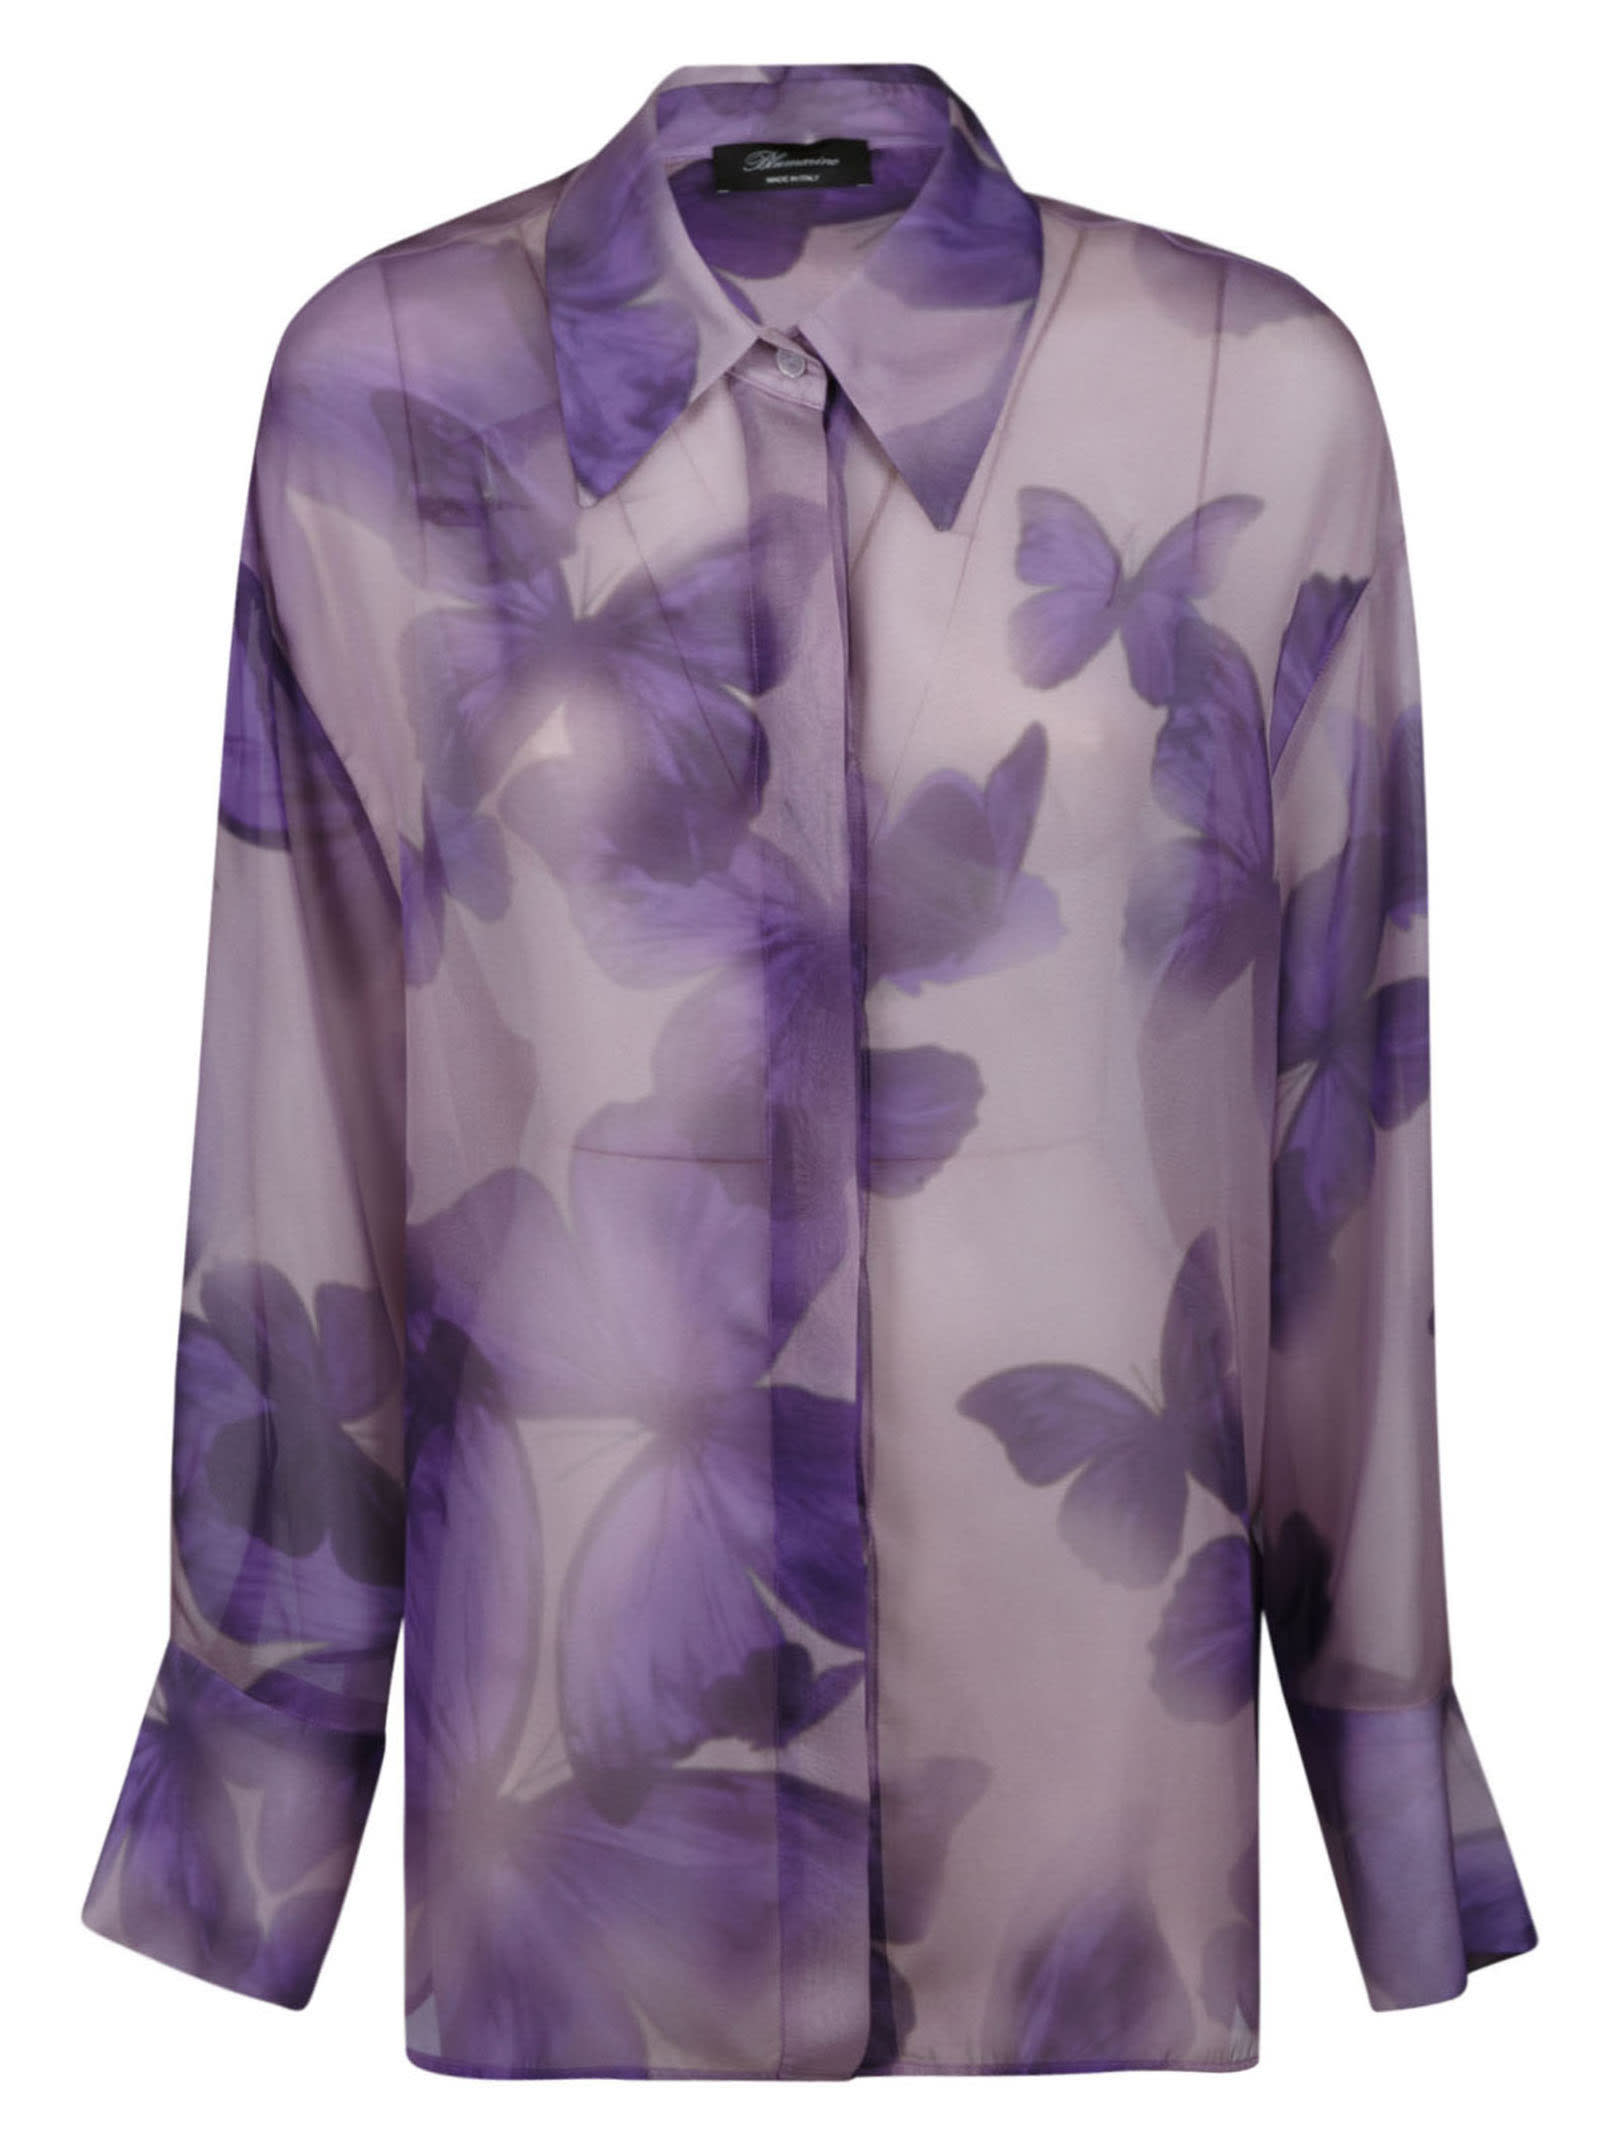 Blumarine Butterfly Print Lace Shirt